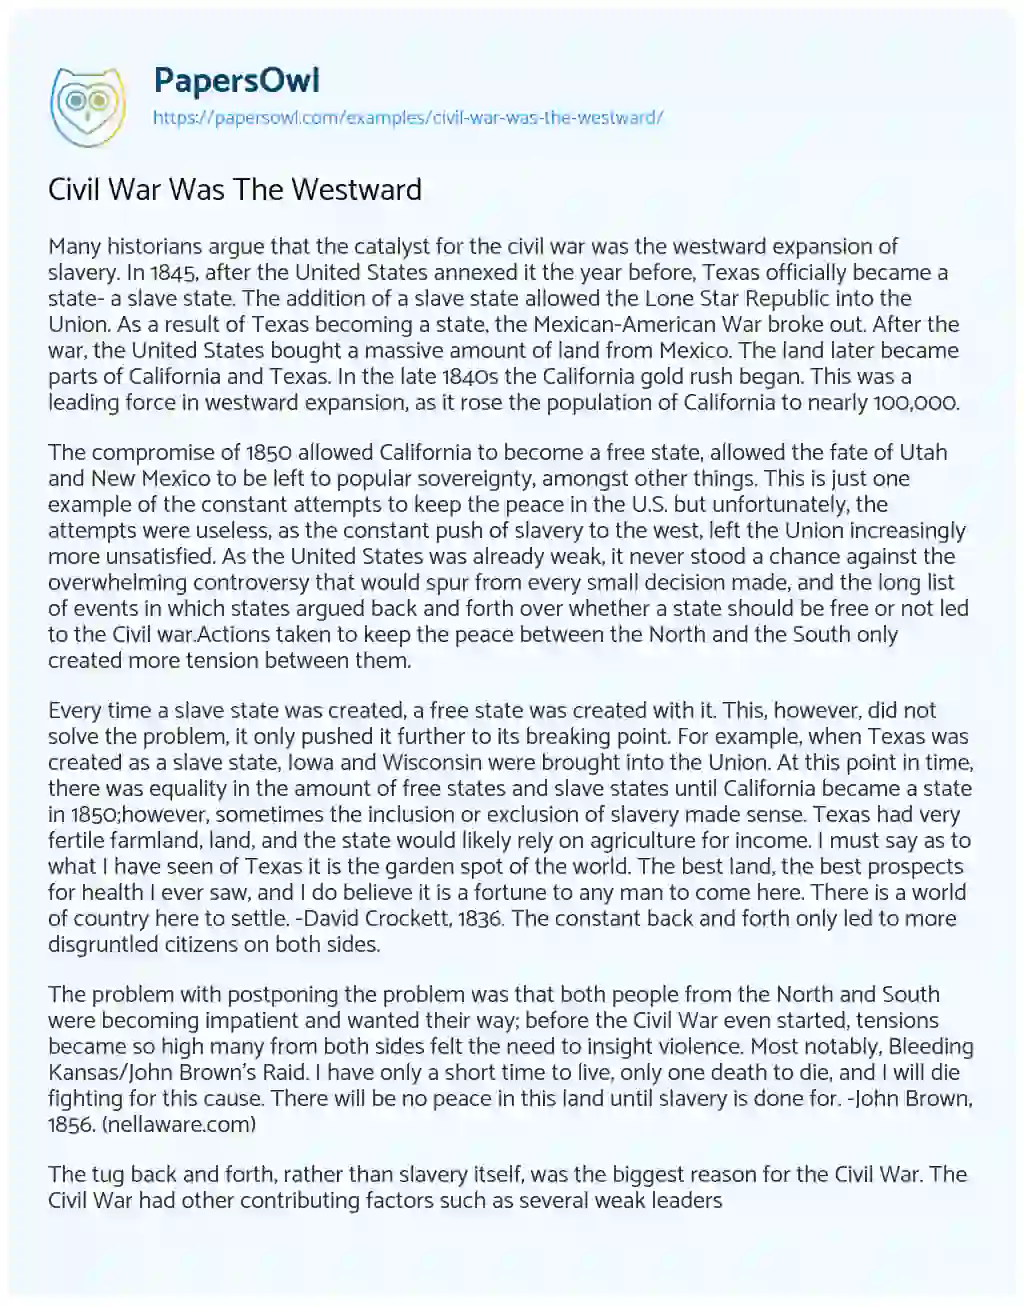 Essay on Civil War was the Westward